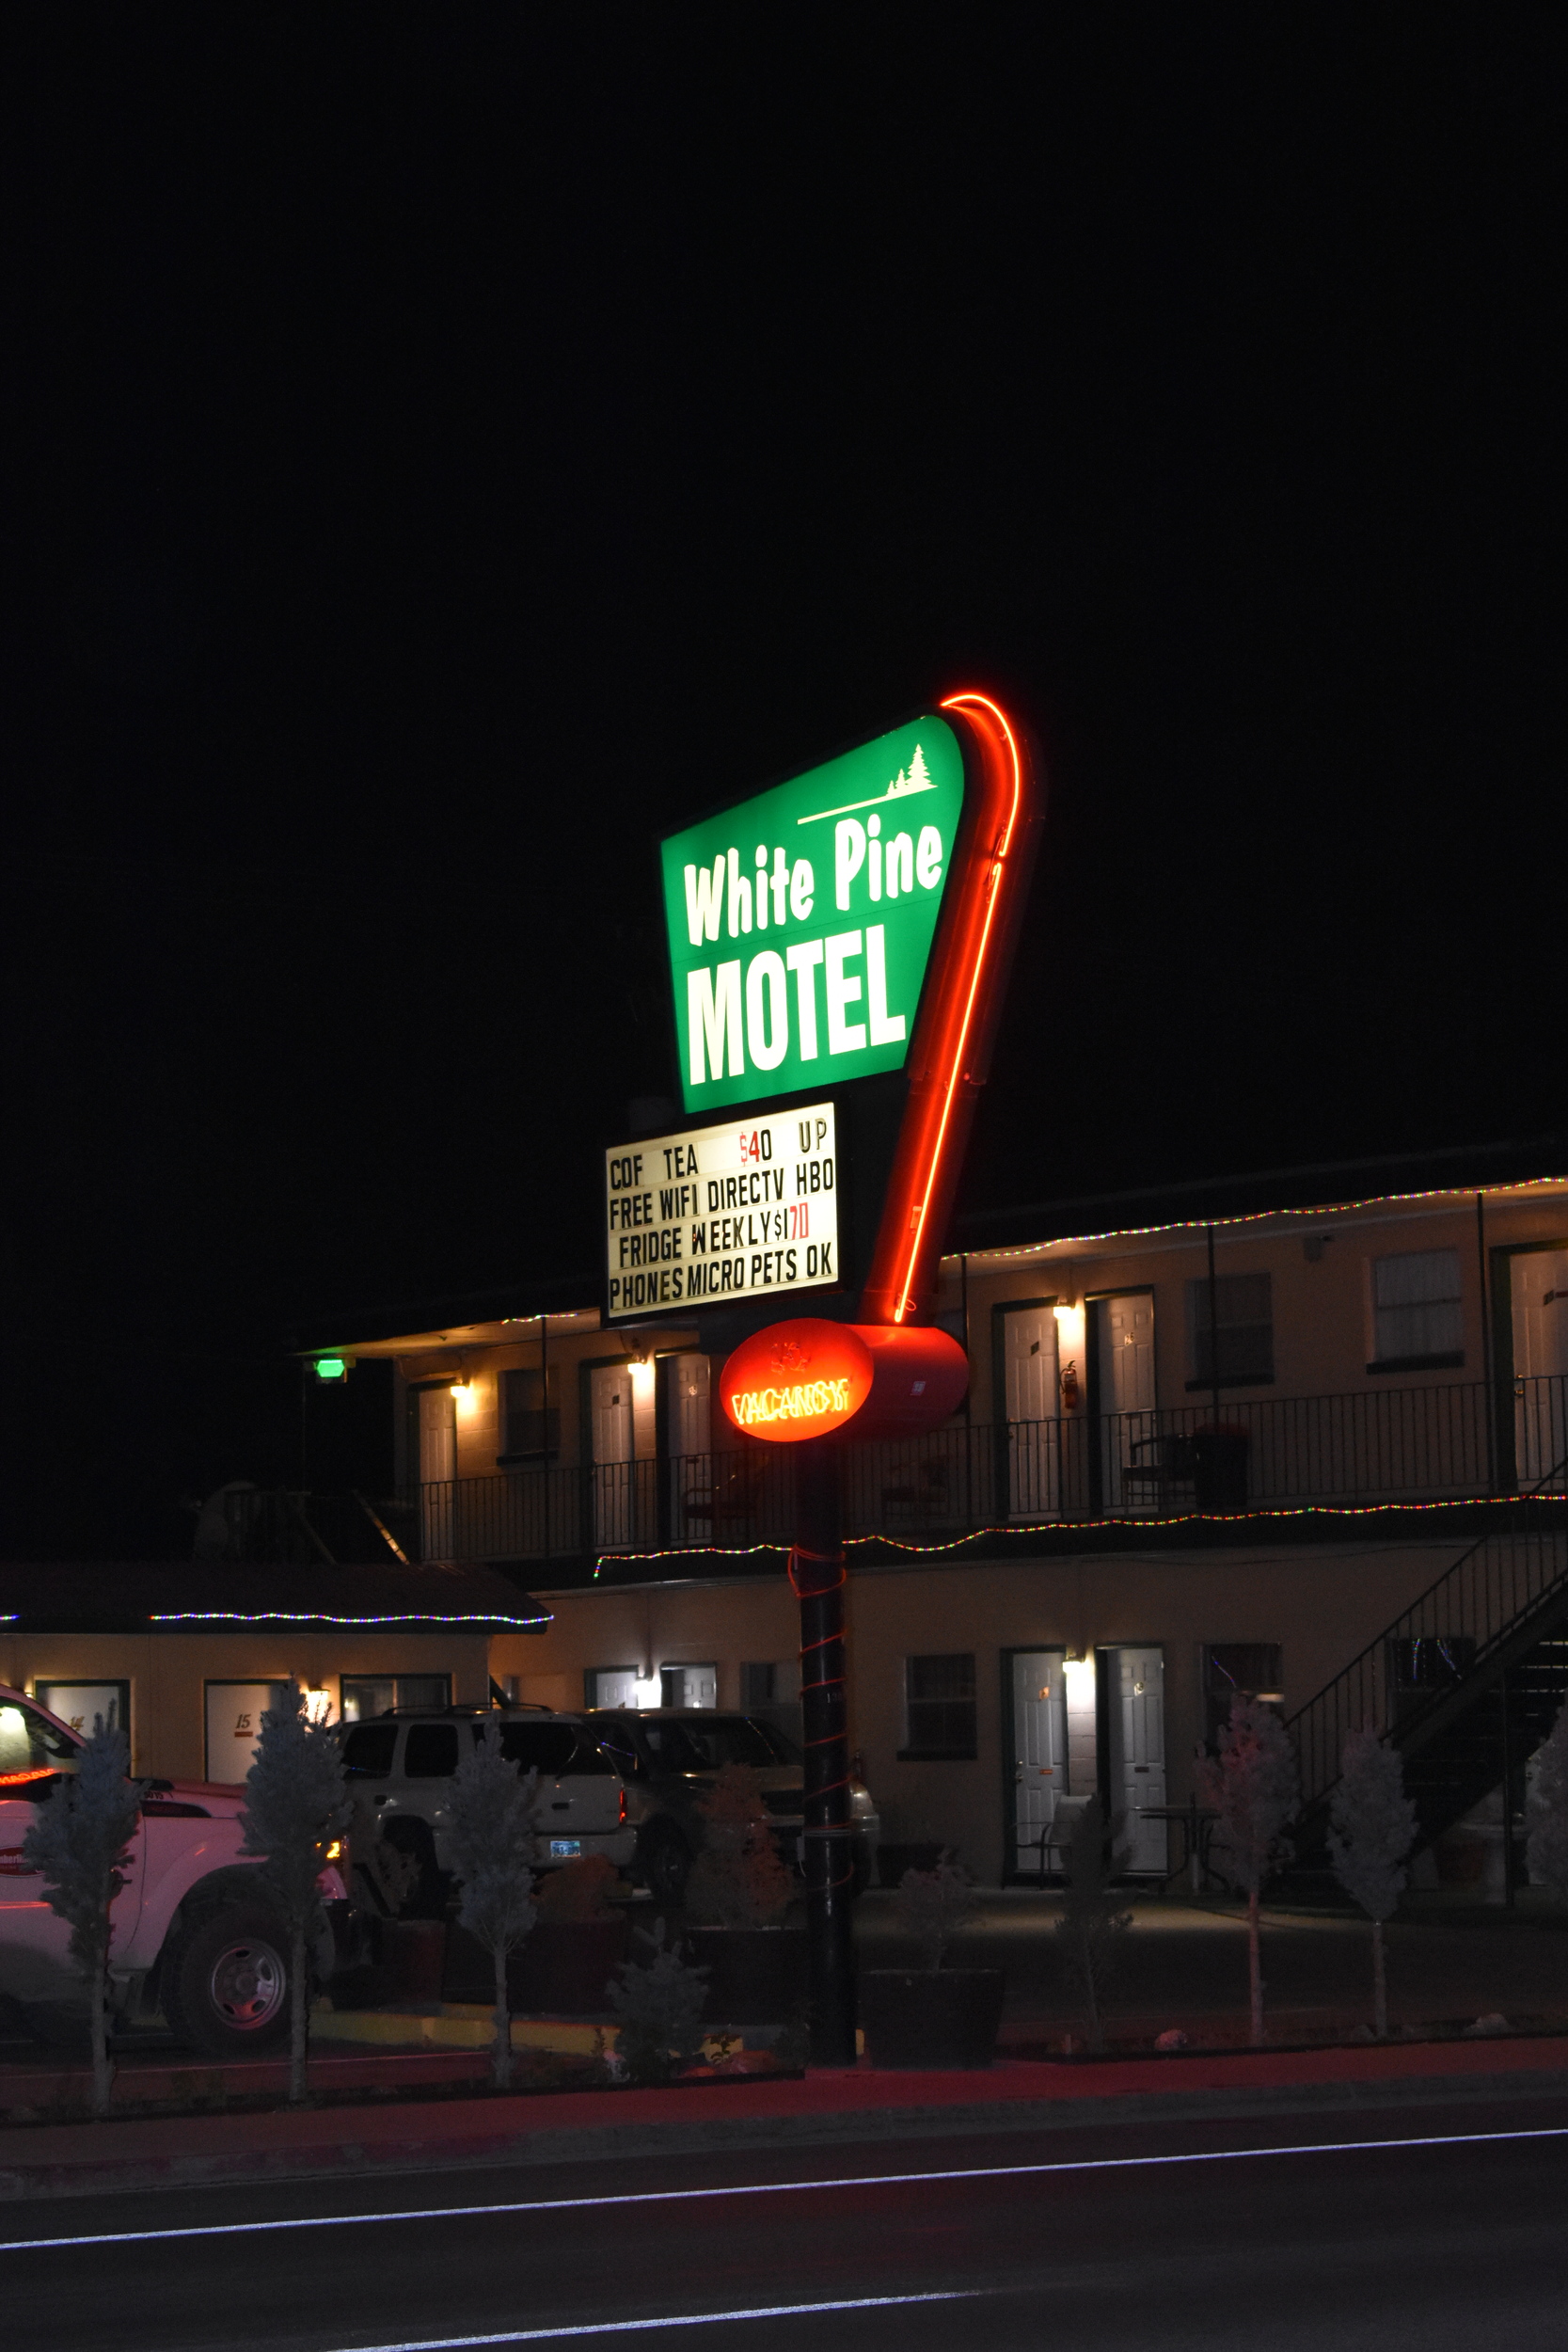 White Pine Motel mounted sign, Ely, Nevada